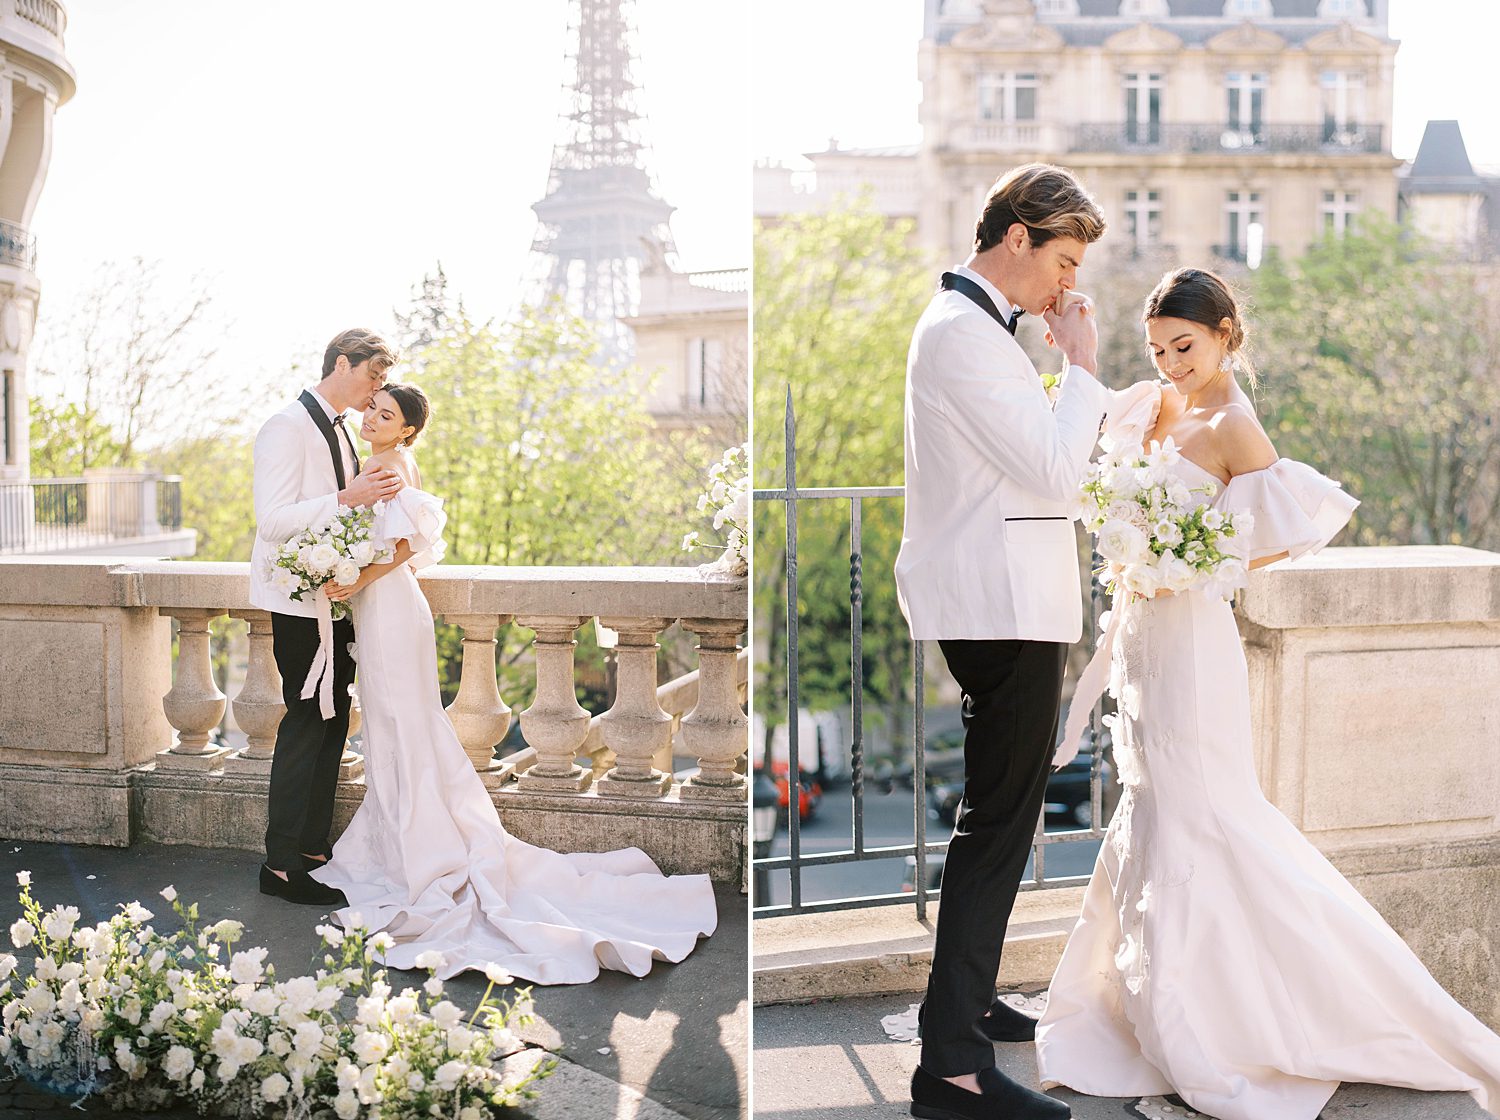 Paris wedding photographer Ruth Terrero shares tips to plan your dream Paris wedding day